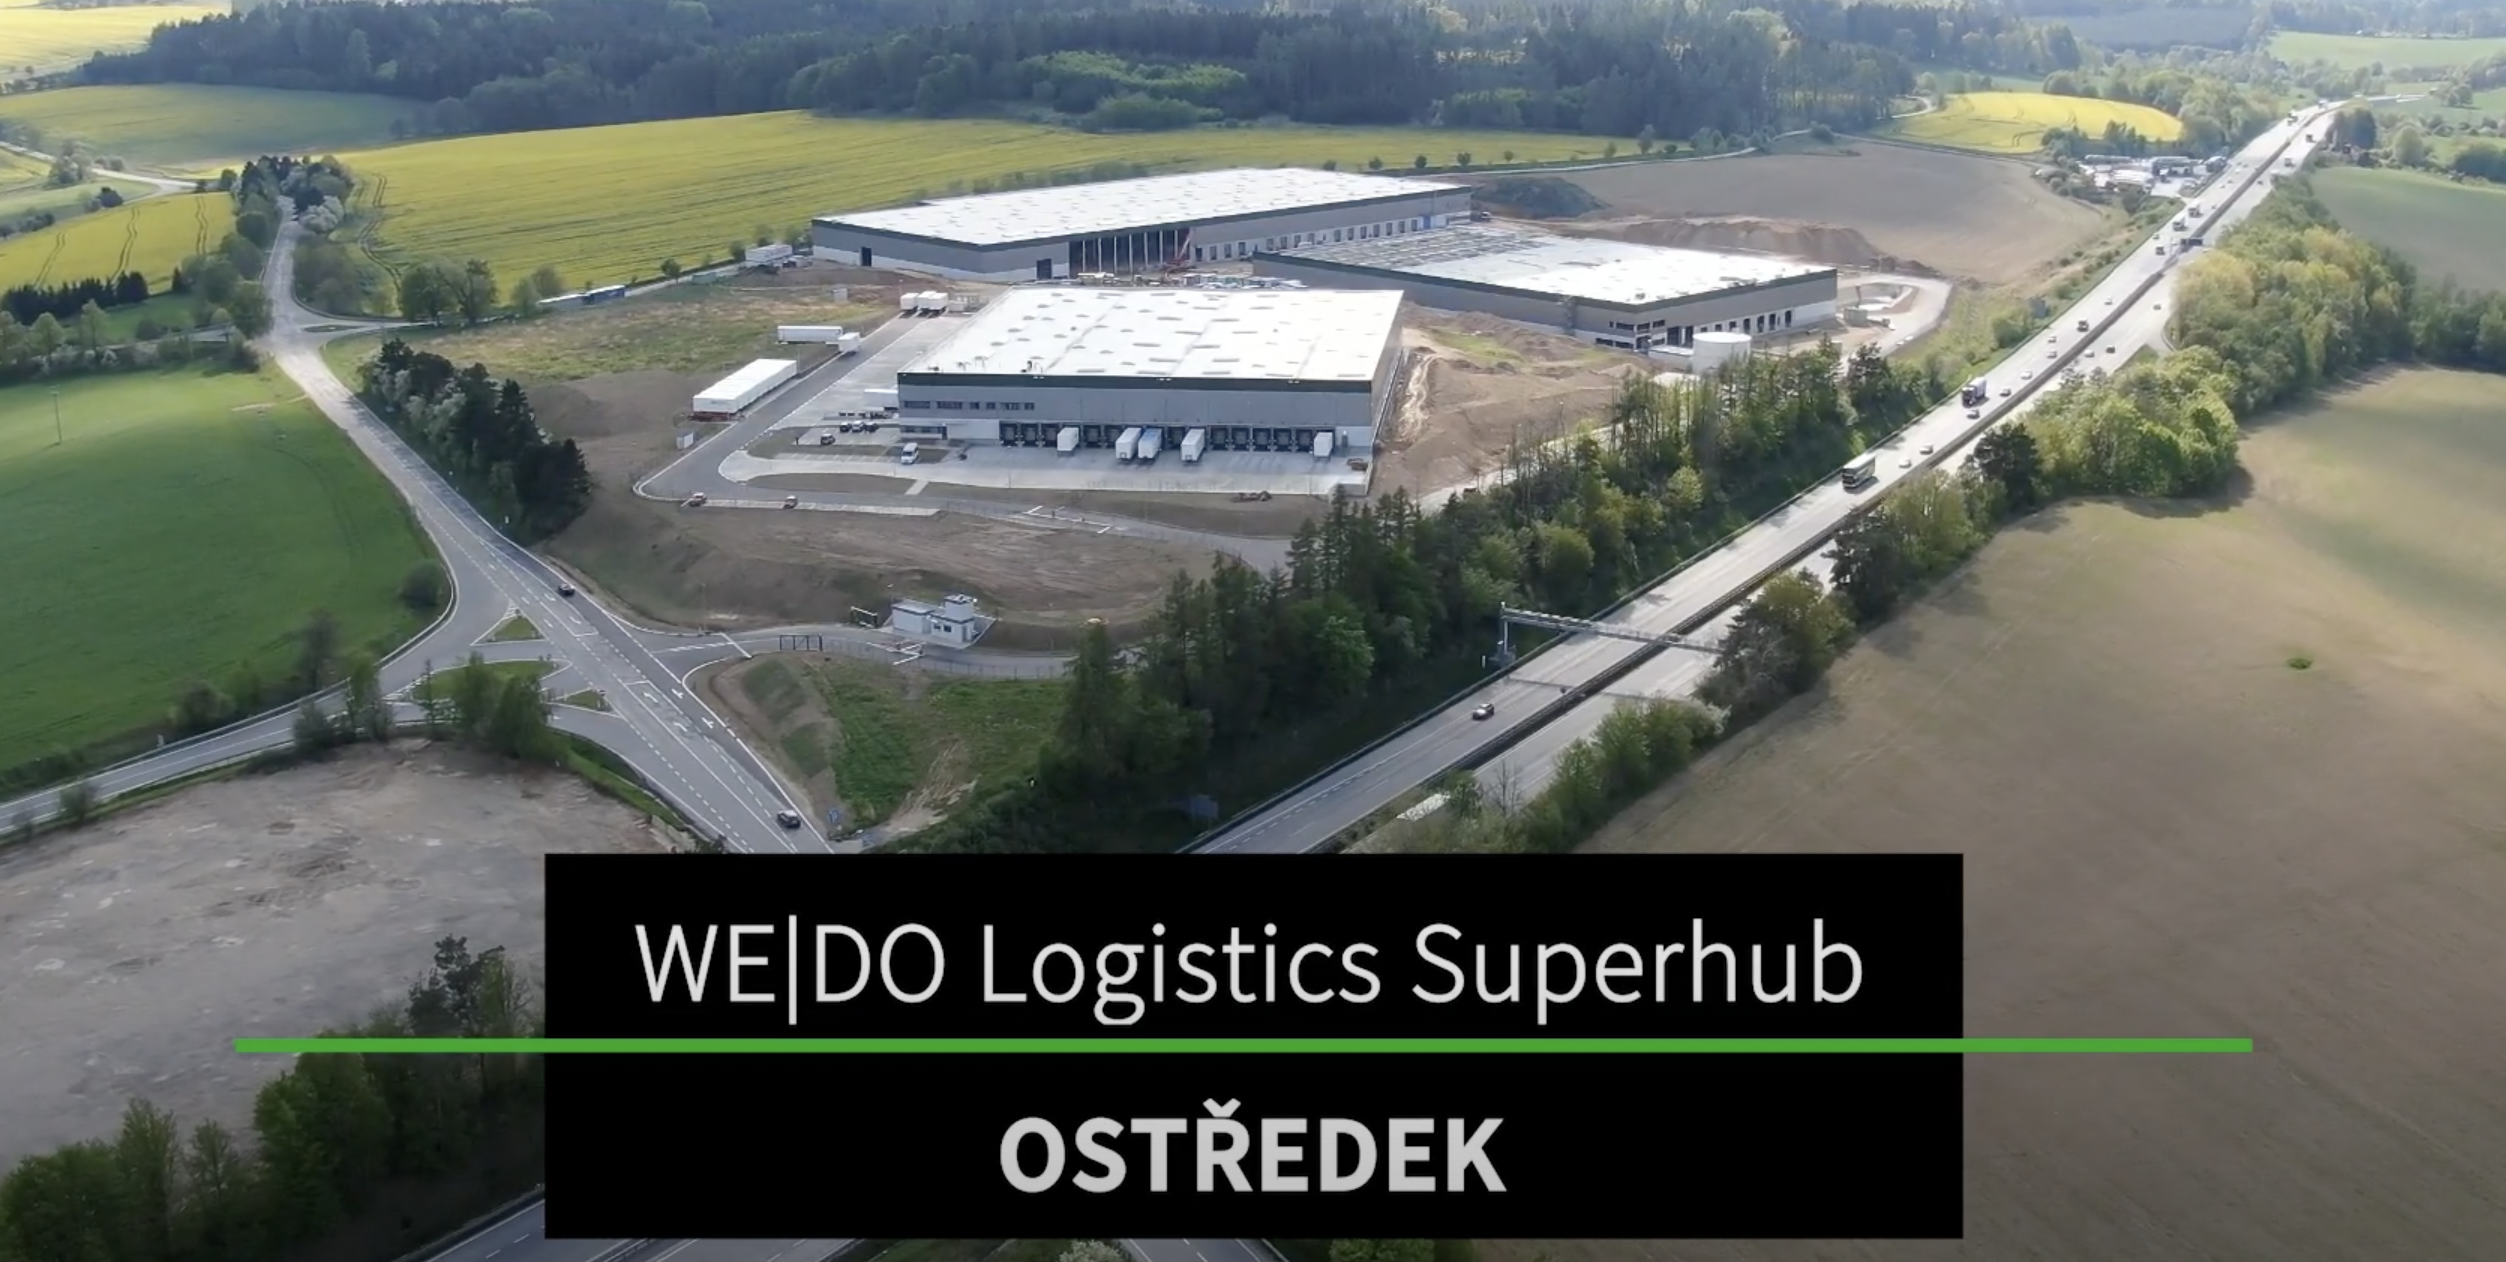 WE|DO Logistics superhub